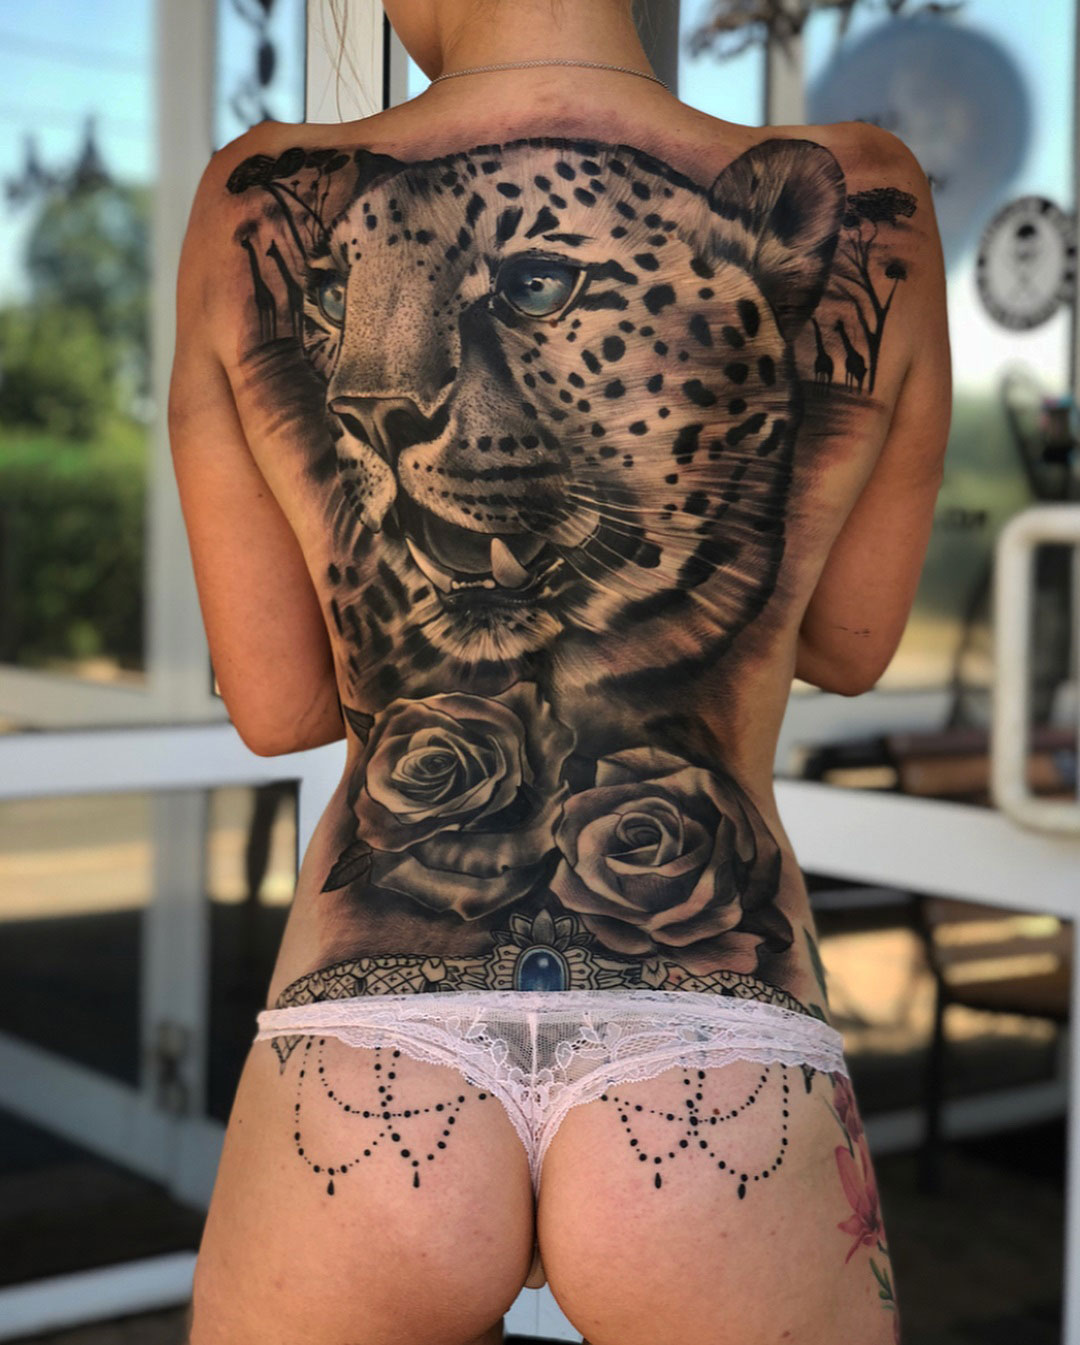 Leopard & roses full back tattoo